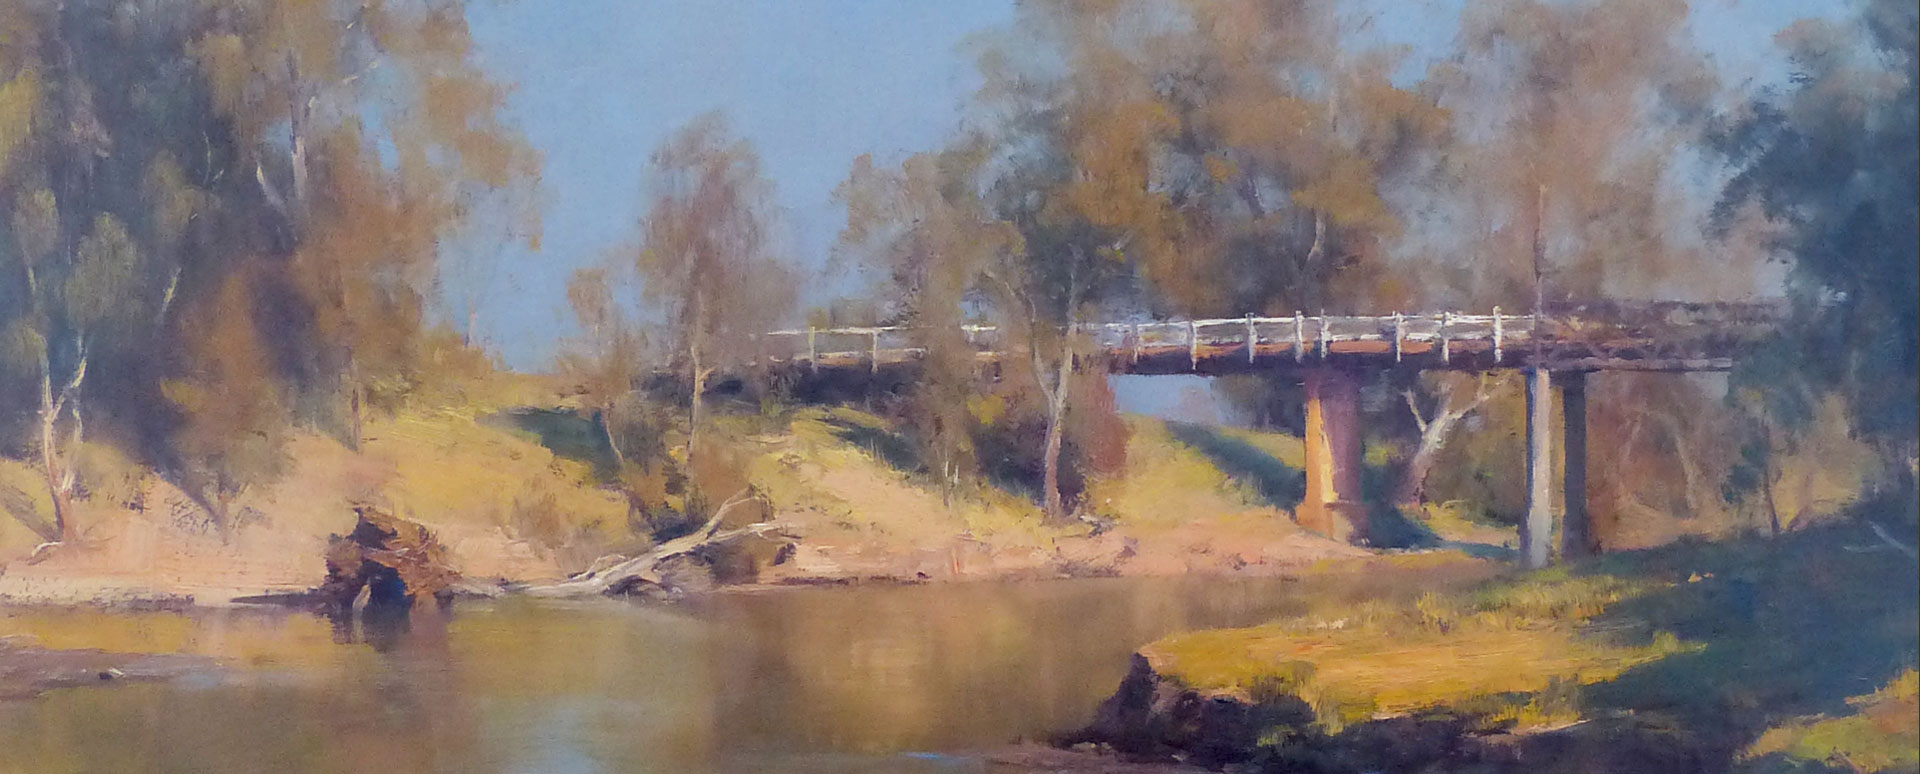 Work of Art Community Gallery - Painting of a Bridge